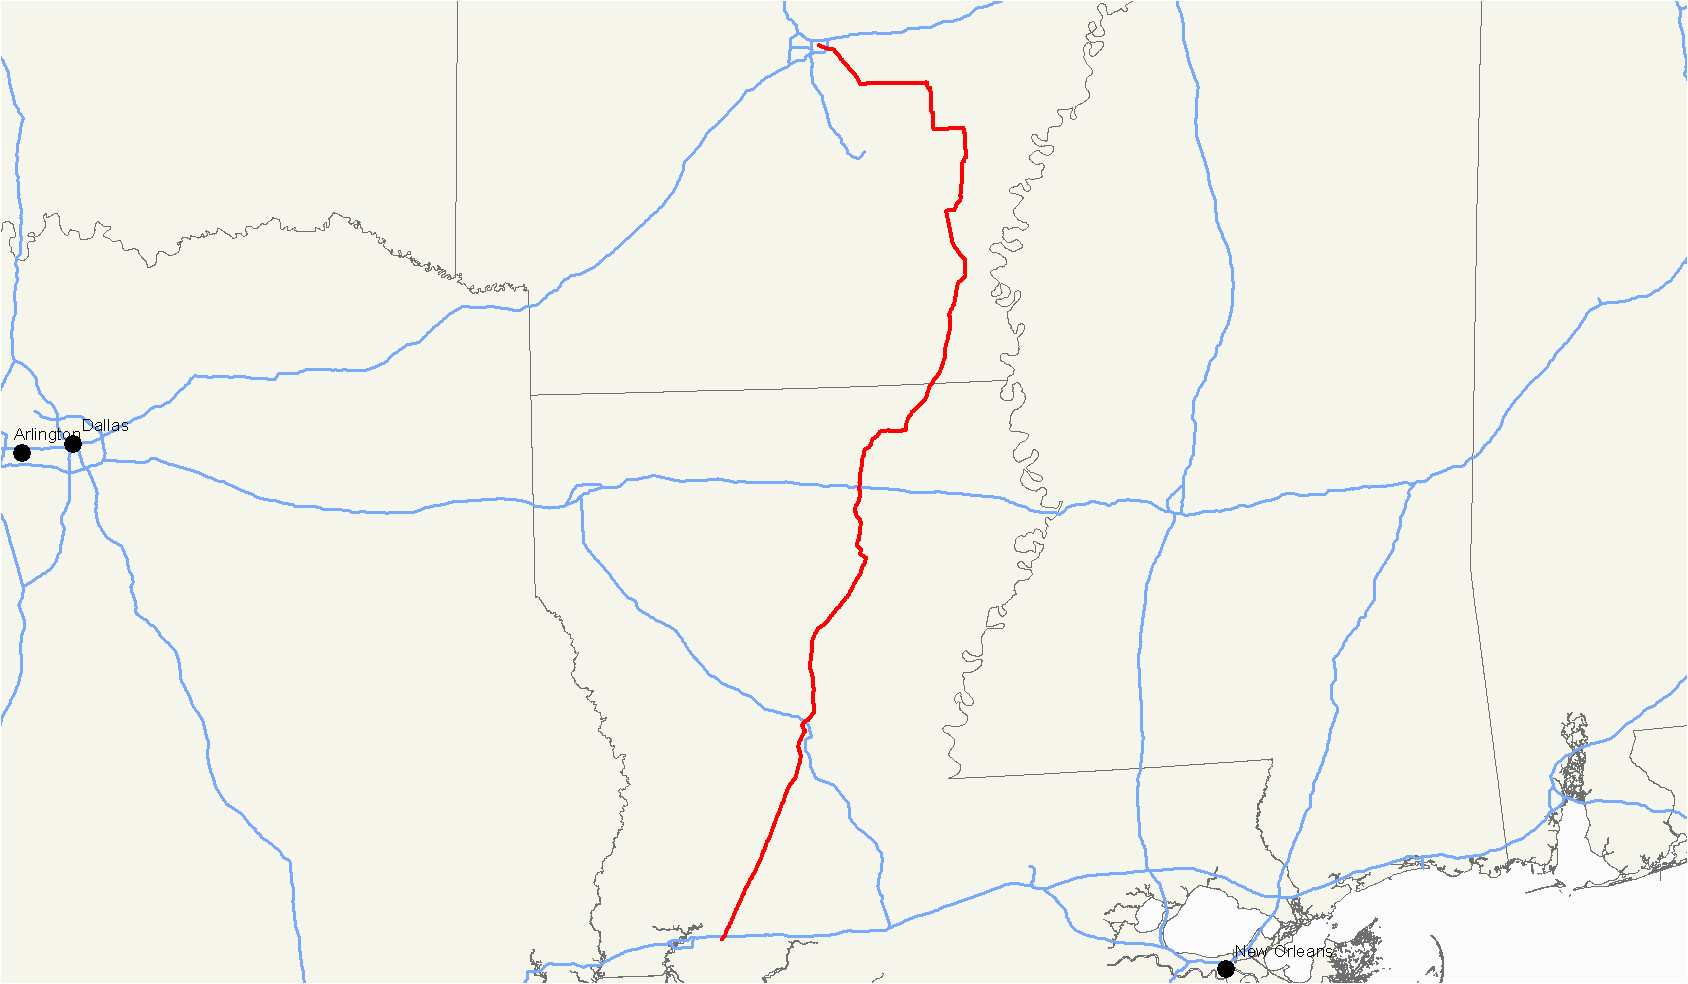 Winnsboro Texas Map U S Route 165 Wikipedia